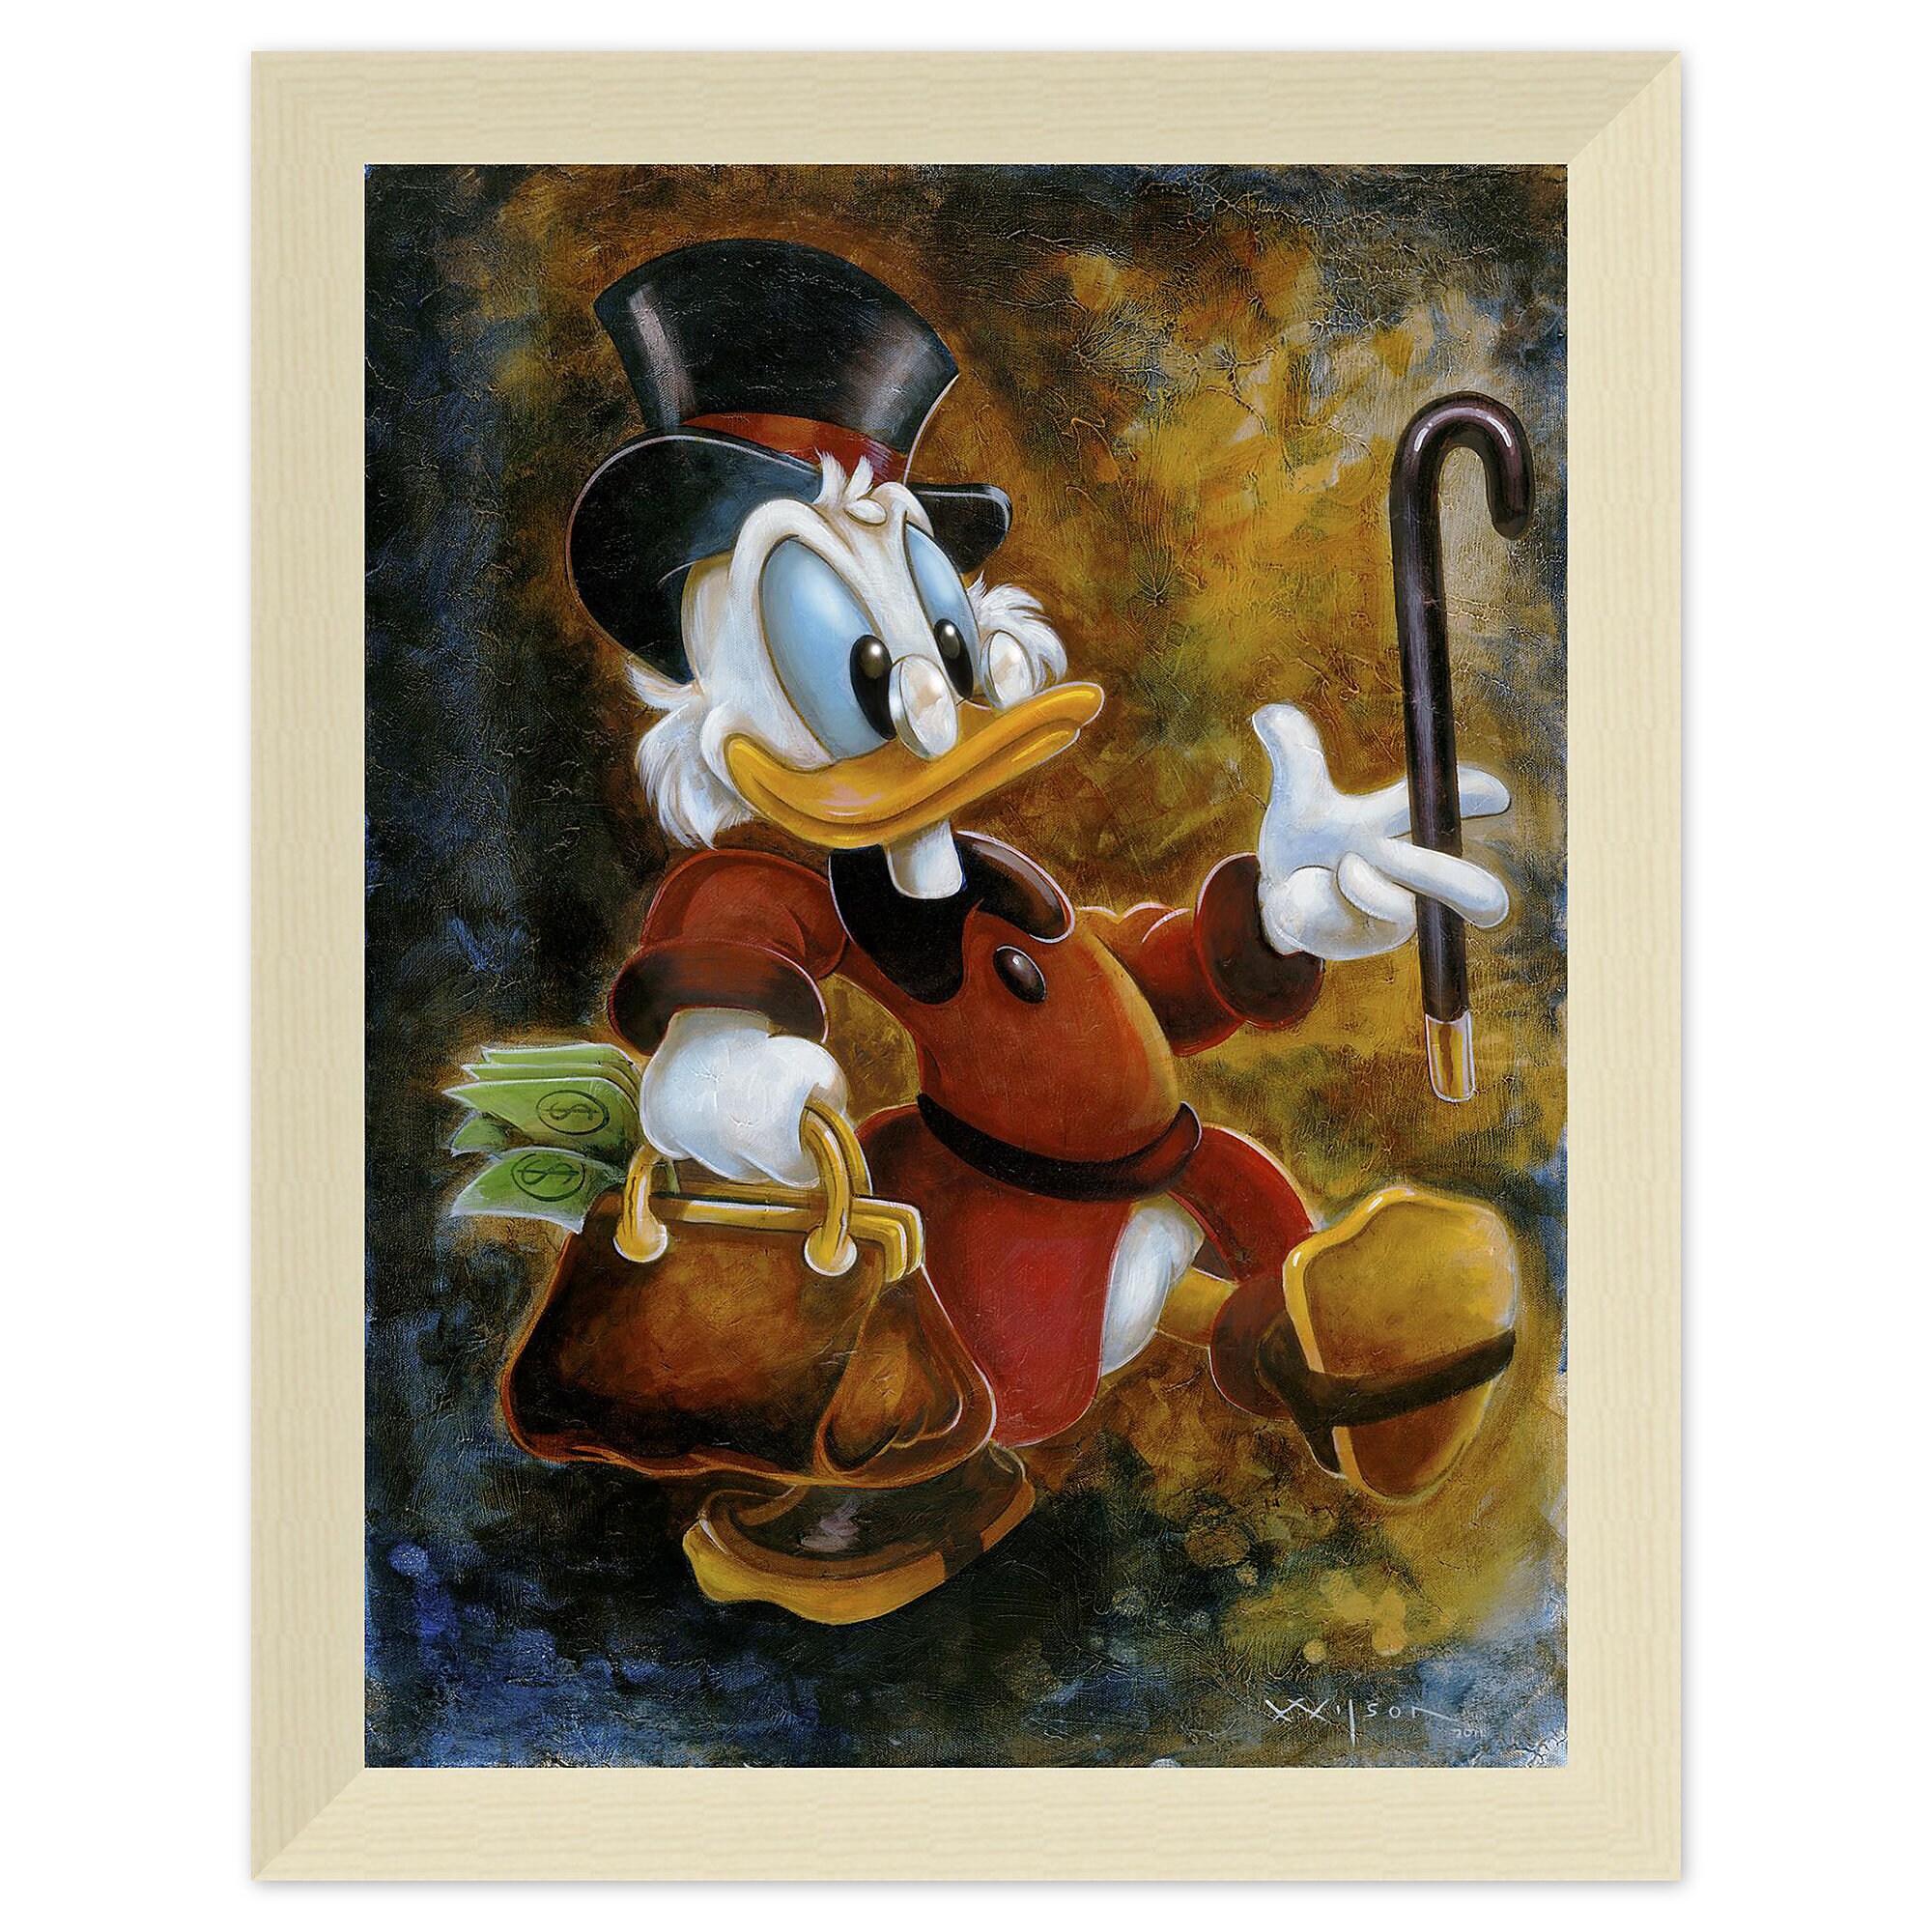 Scrooge McDuck ''Scrooge Treasure'' Giclée by Darren Wilson